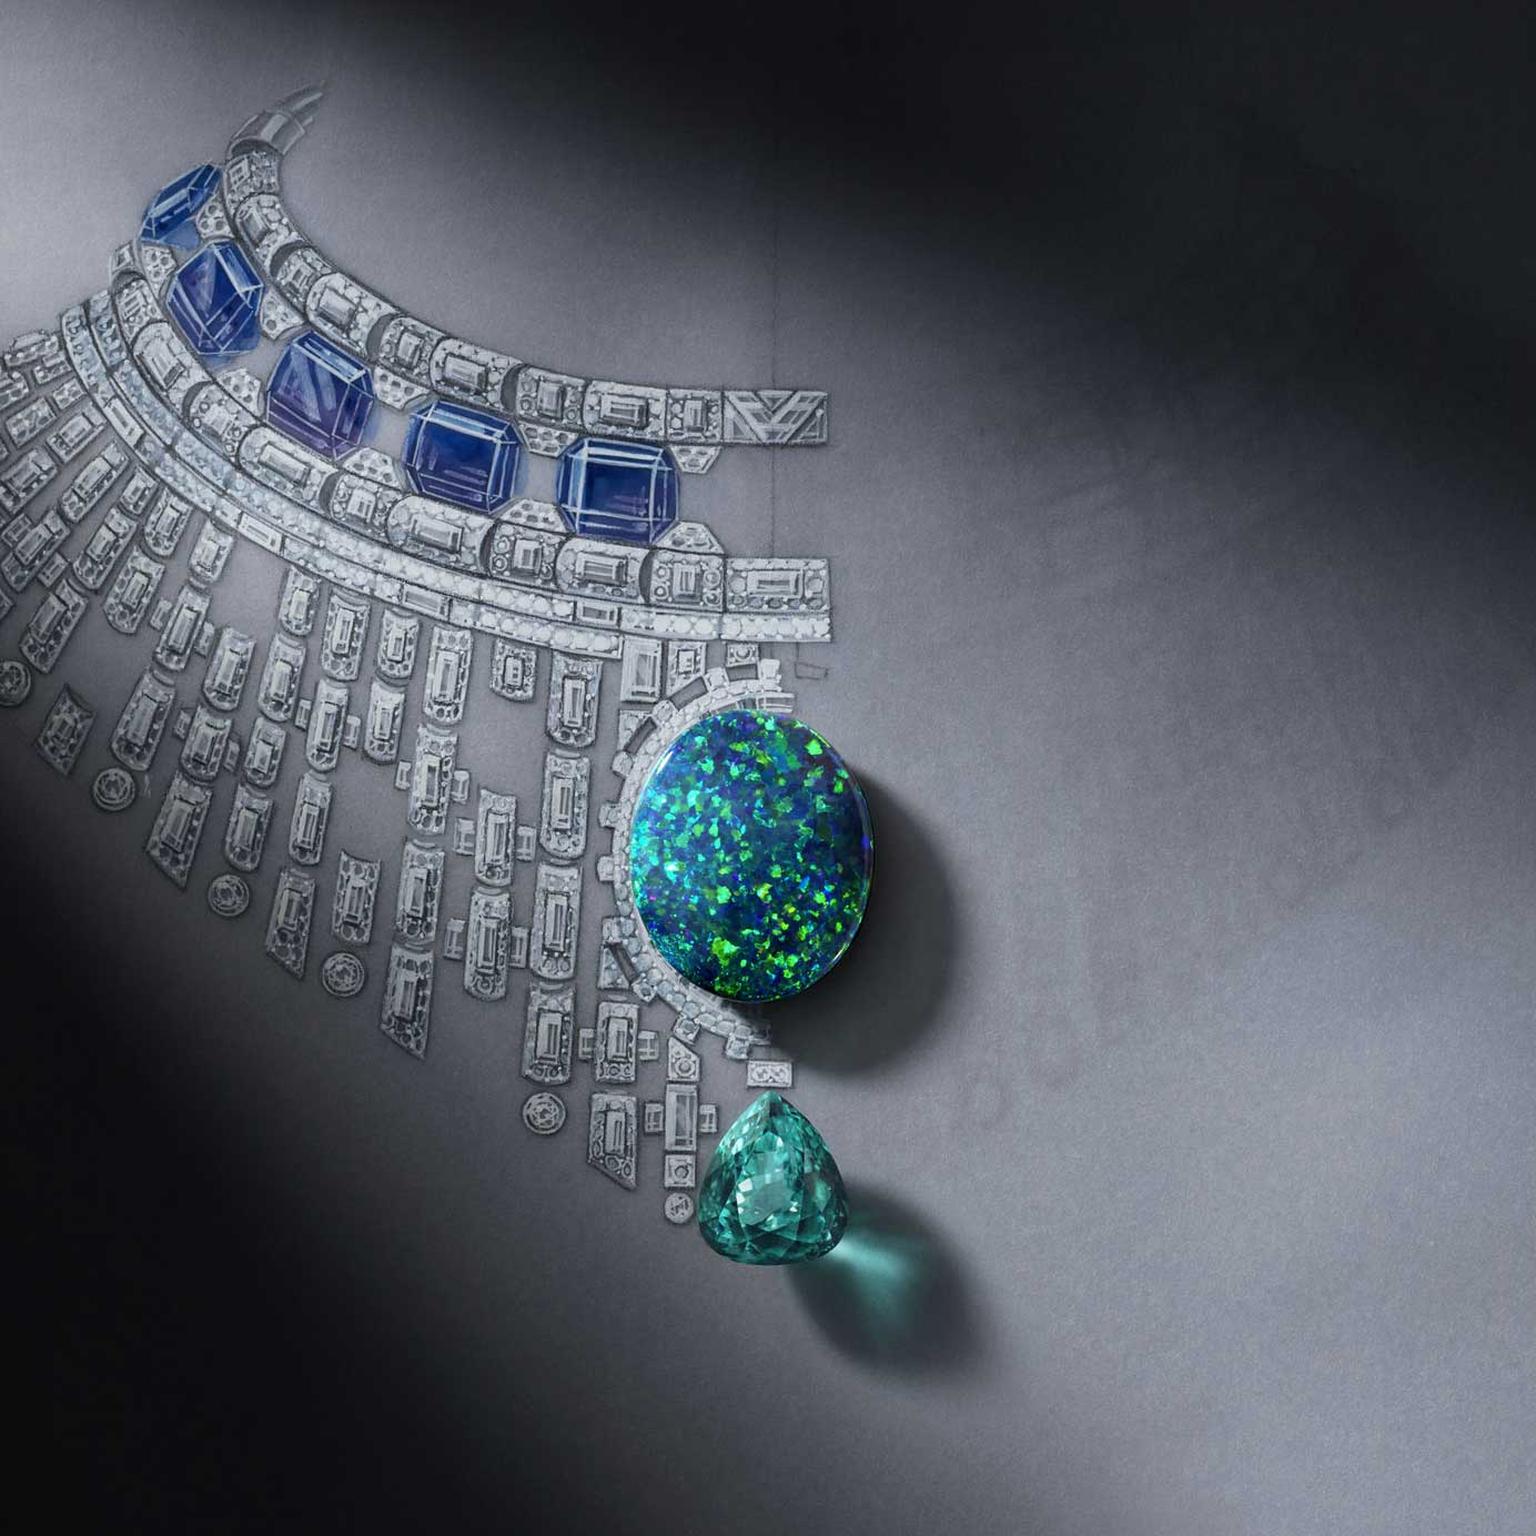 Louis Vuitton's dazzling Deep Time high jewels